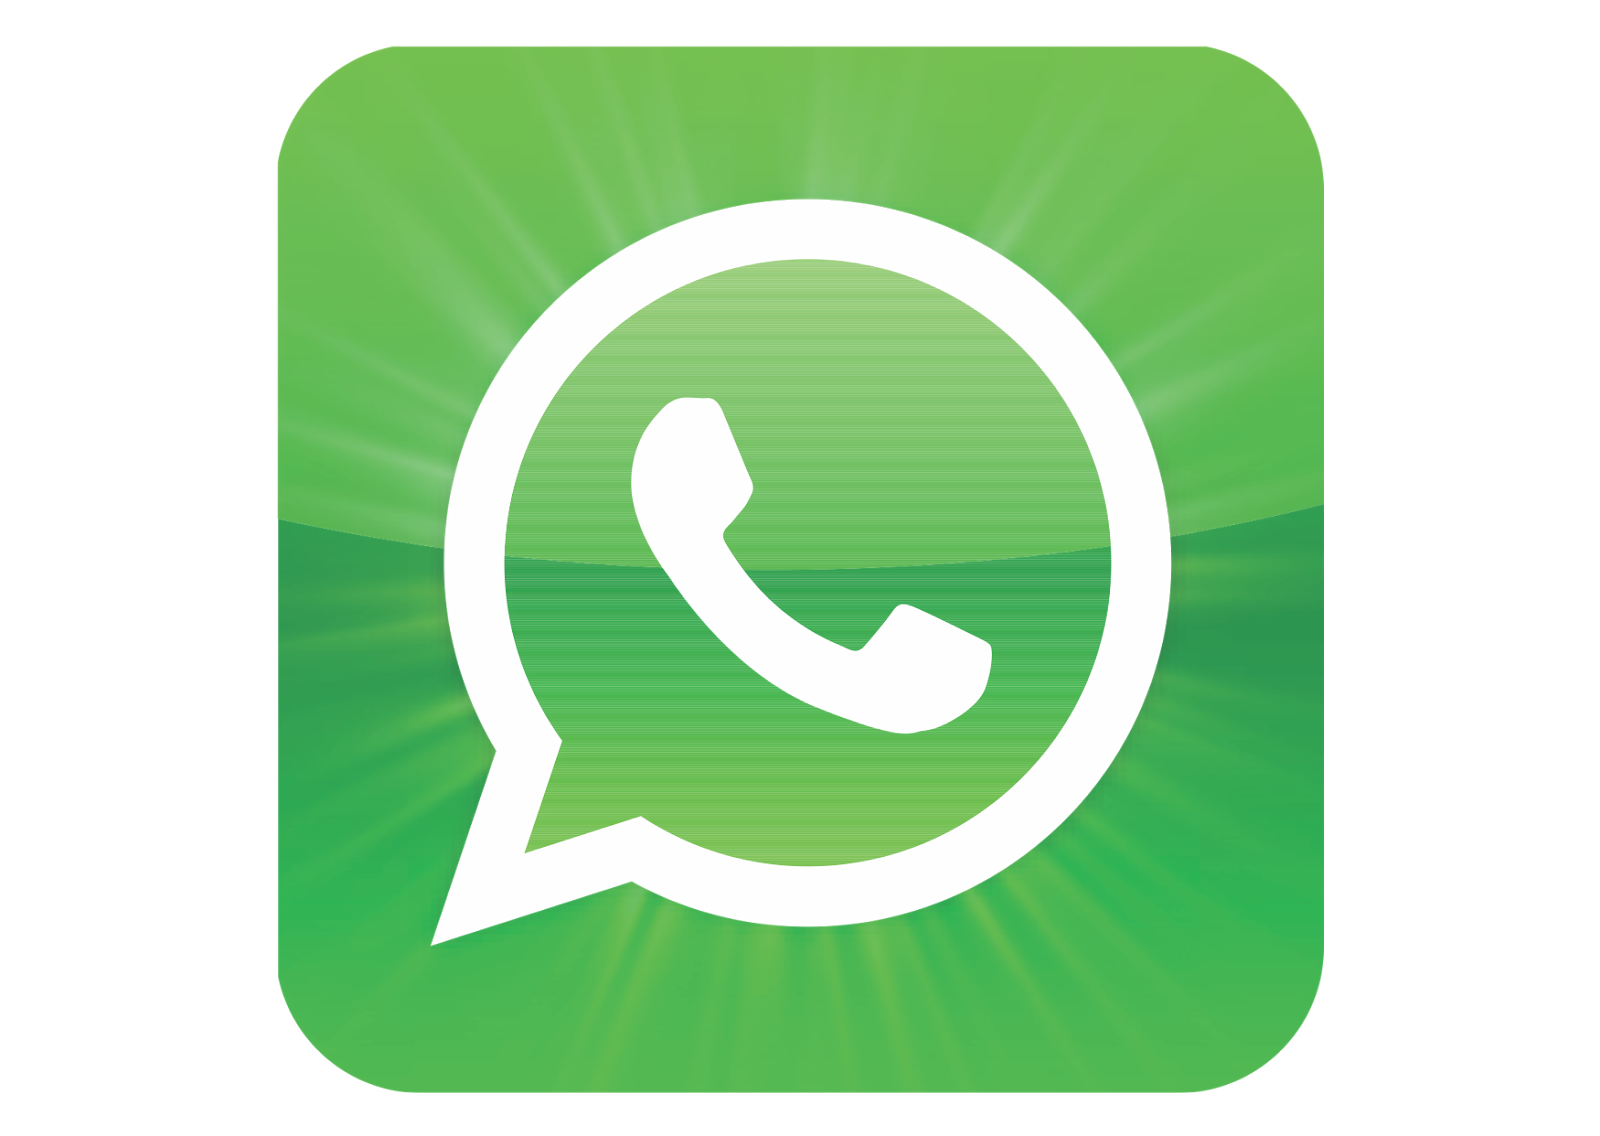 WhatsApp: Latest News, Videos and Photos on WhatsApp